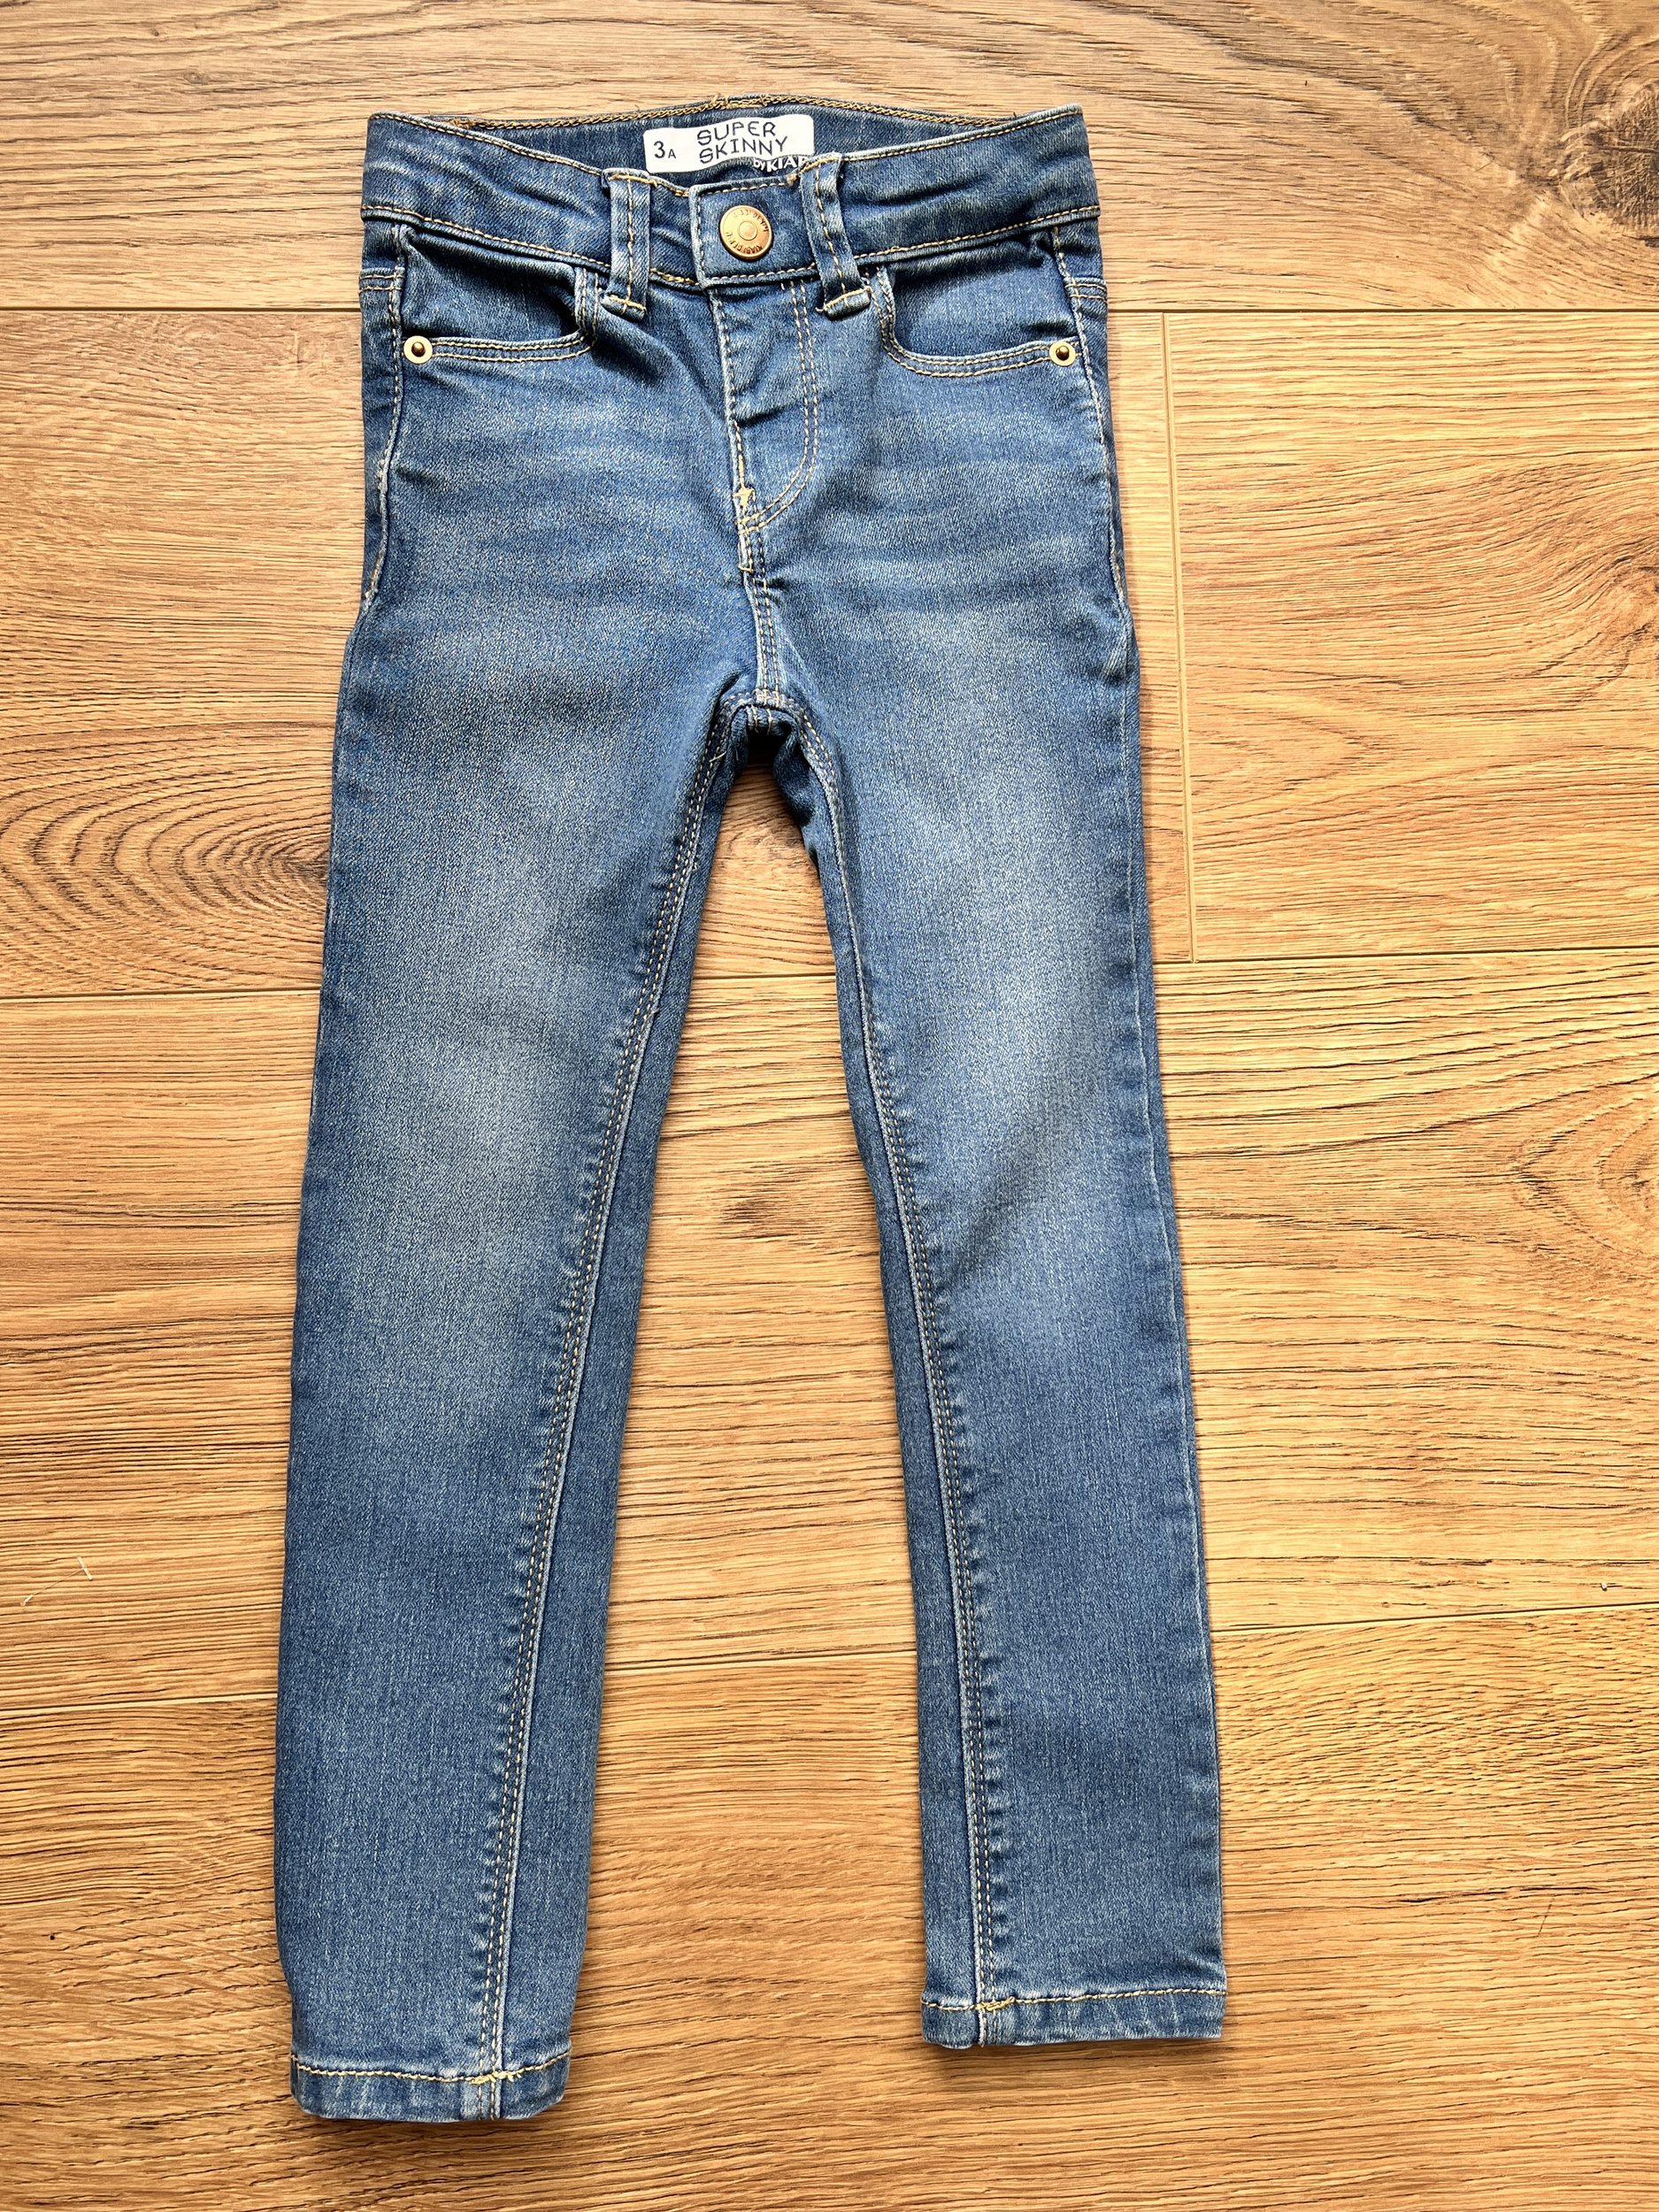 Pantalon jean super skinny bleu bébé fille - Kiabi - 3 ans